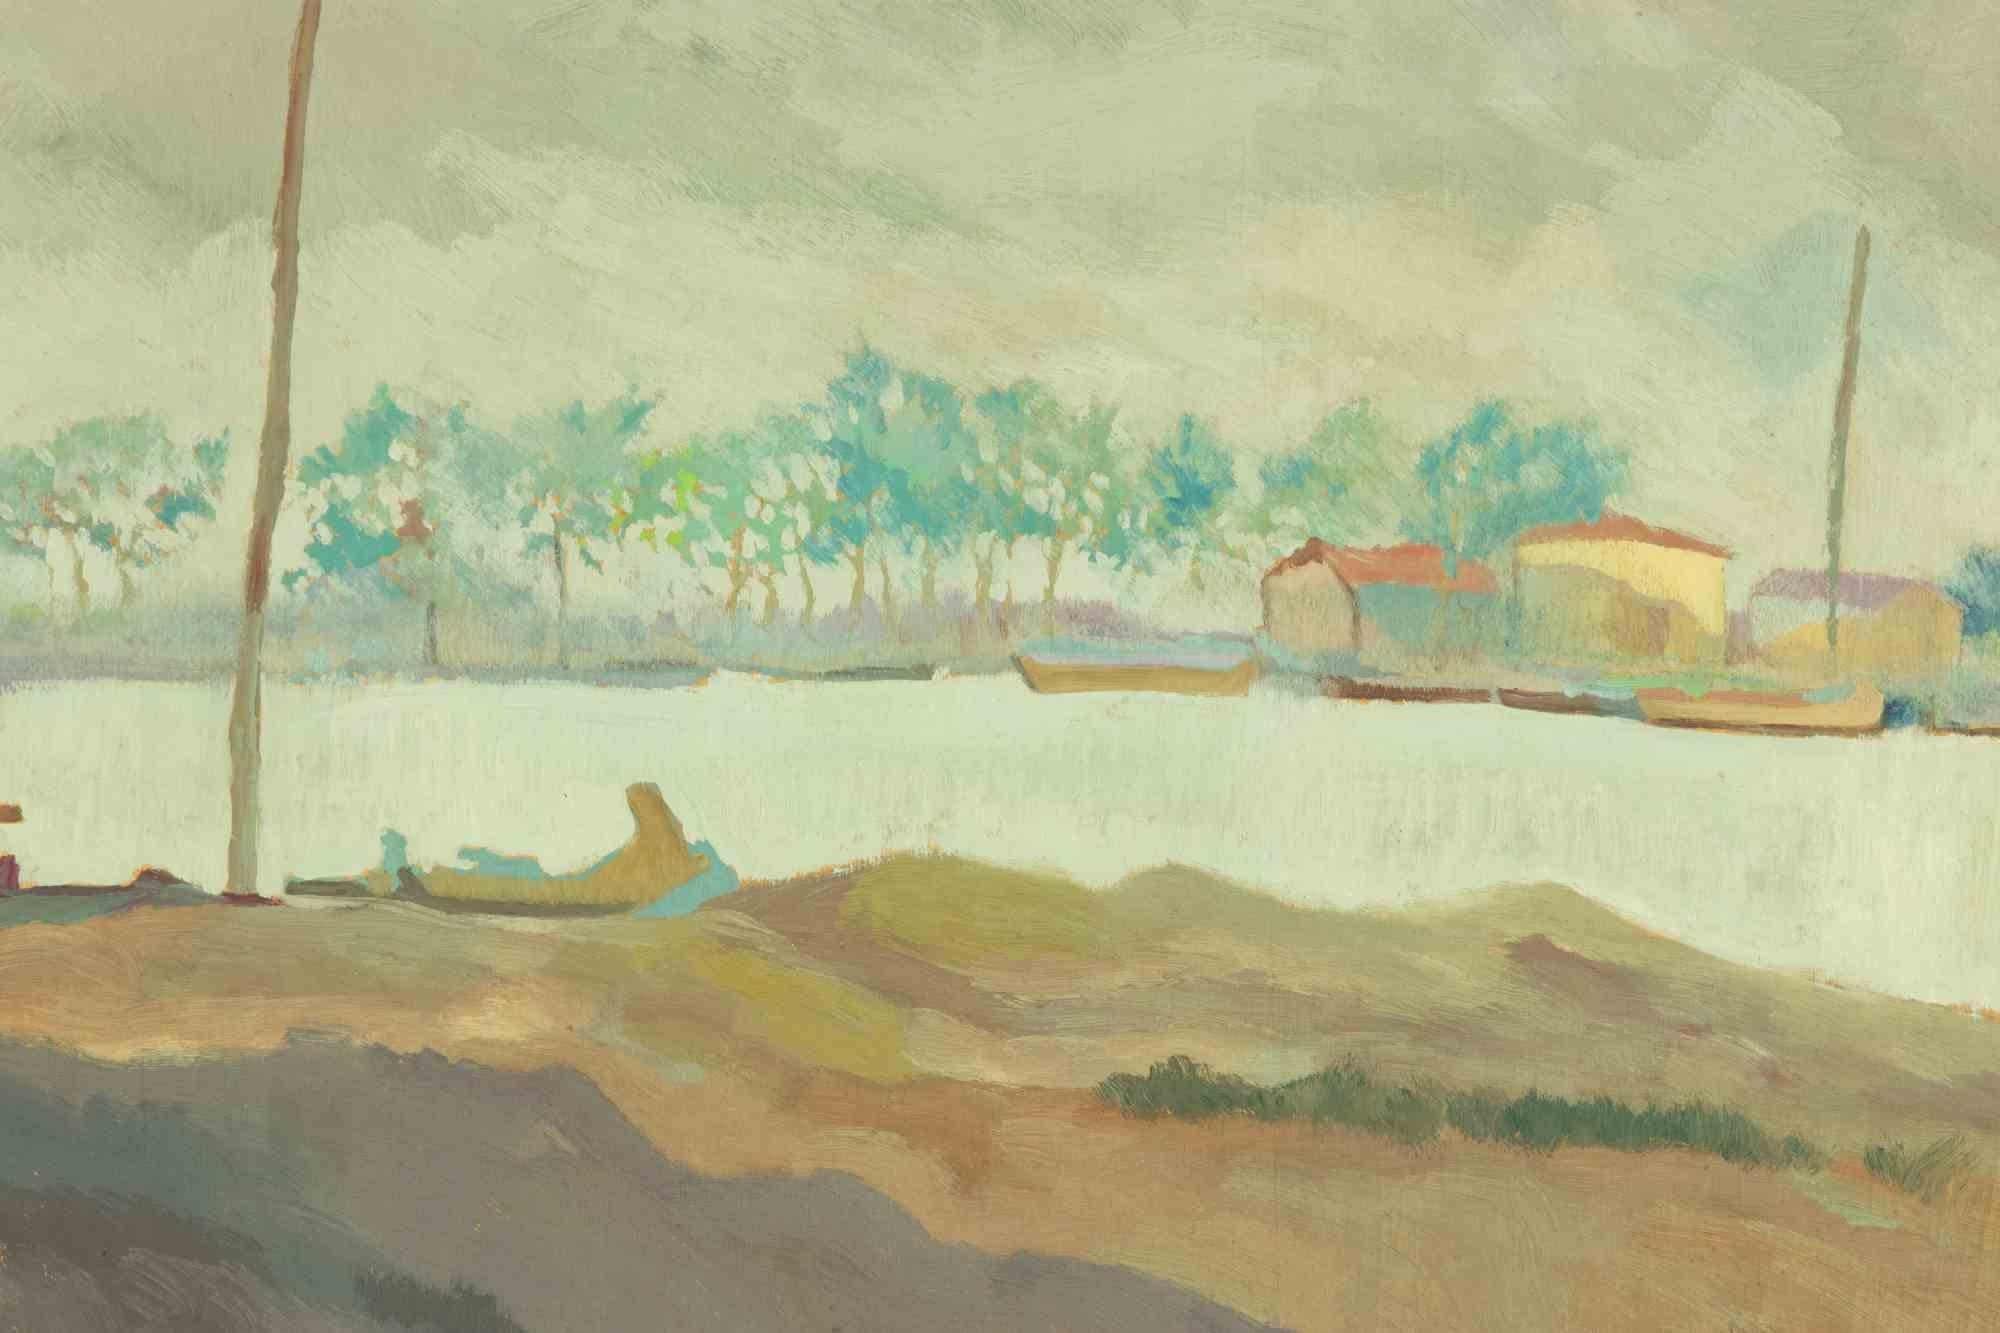 Carlo D'Aloisio da Vasto Landscape Painting - Grey of the River  - Painting by C. D'Aloisio Da Vasto - Mid-20th Century